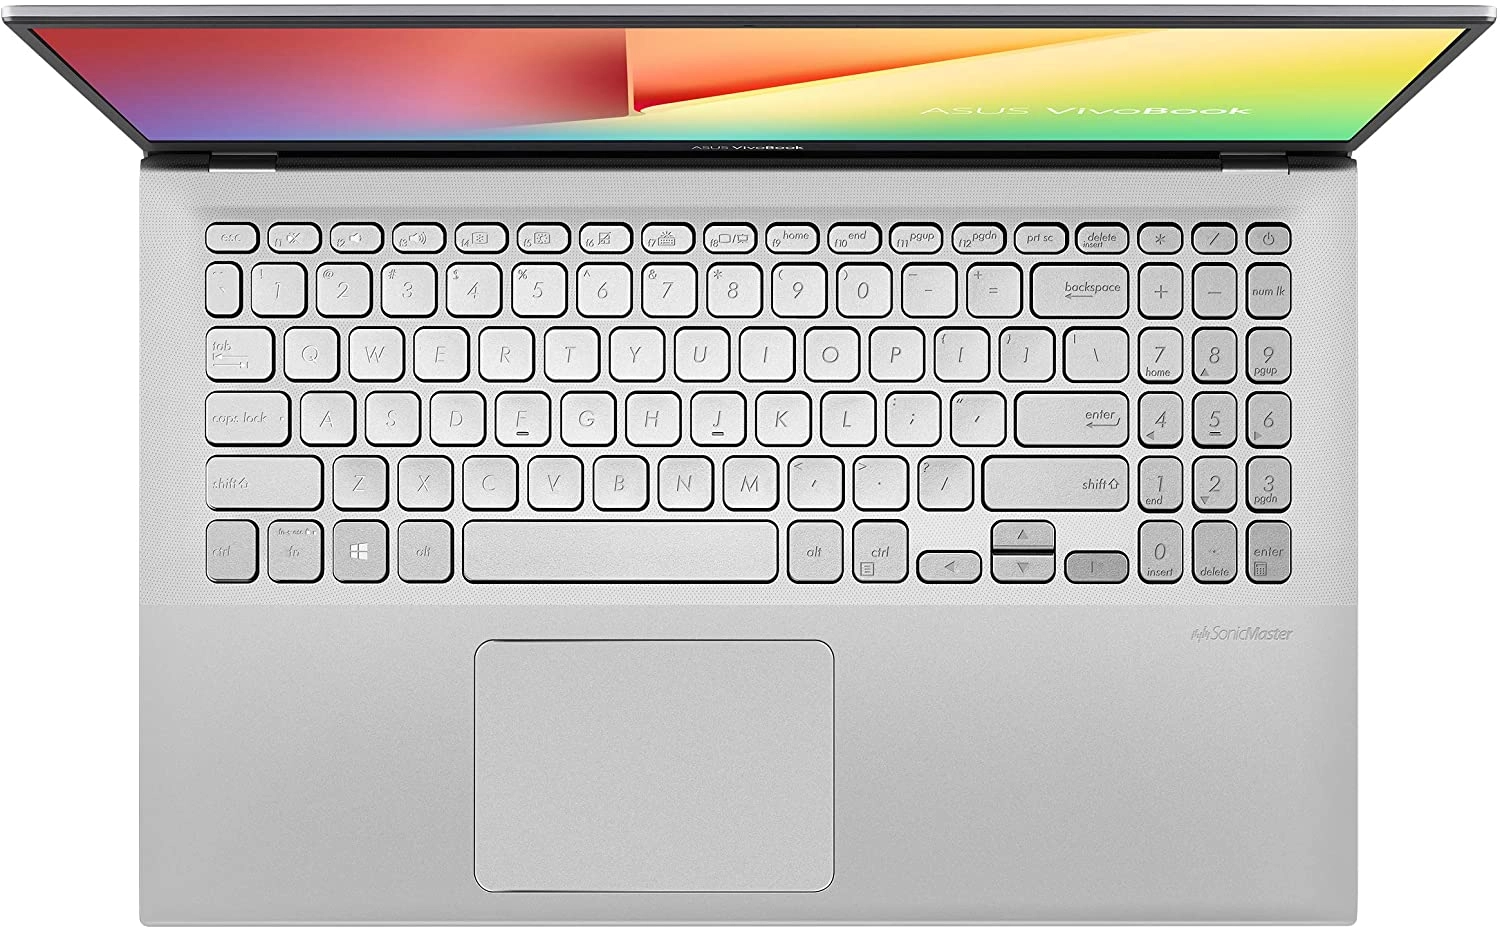 Asus VivoBook S15 laptop image